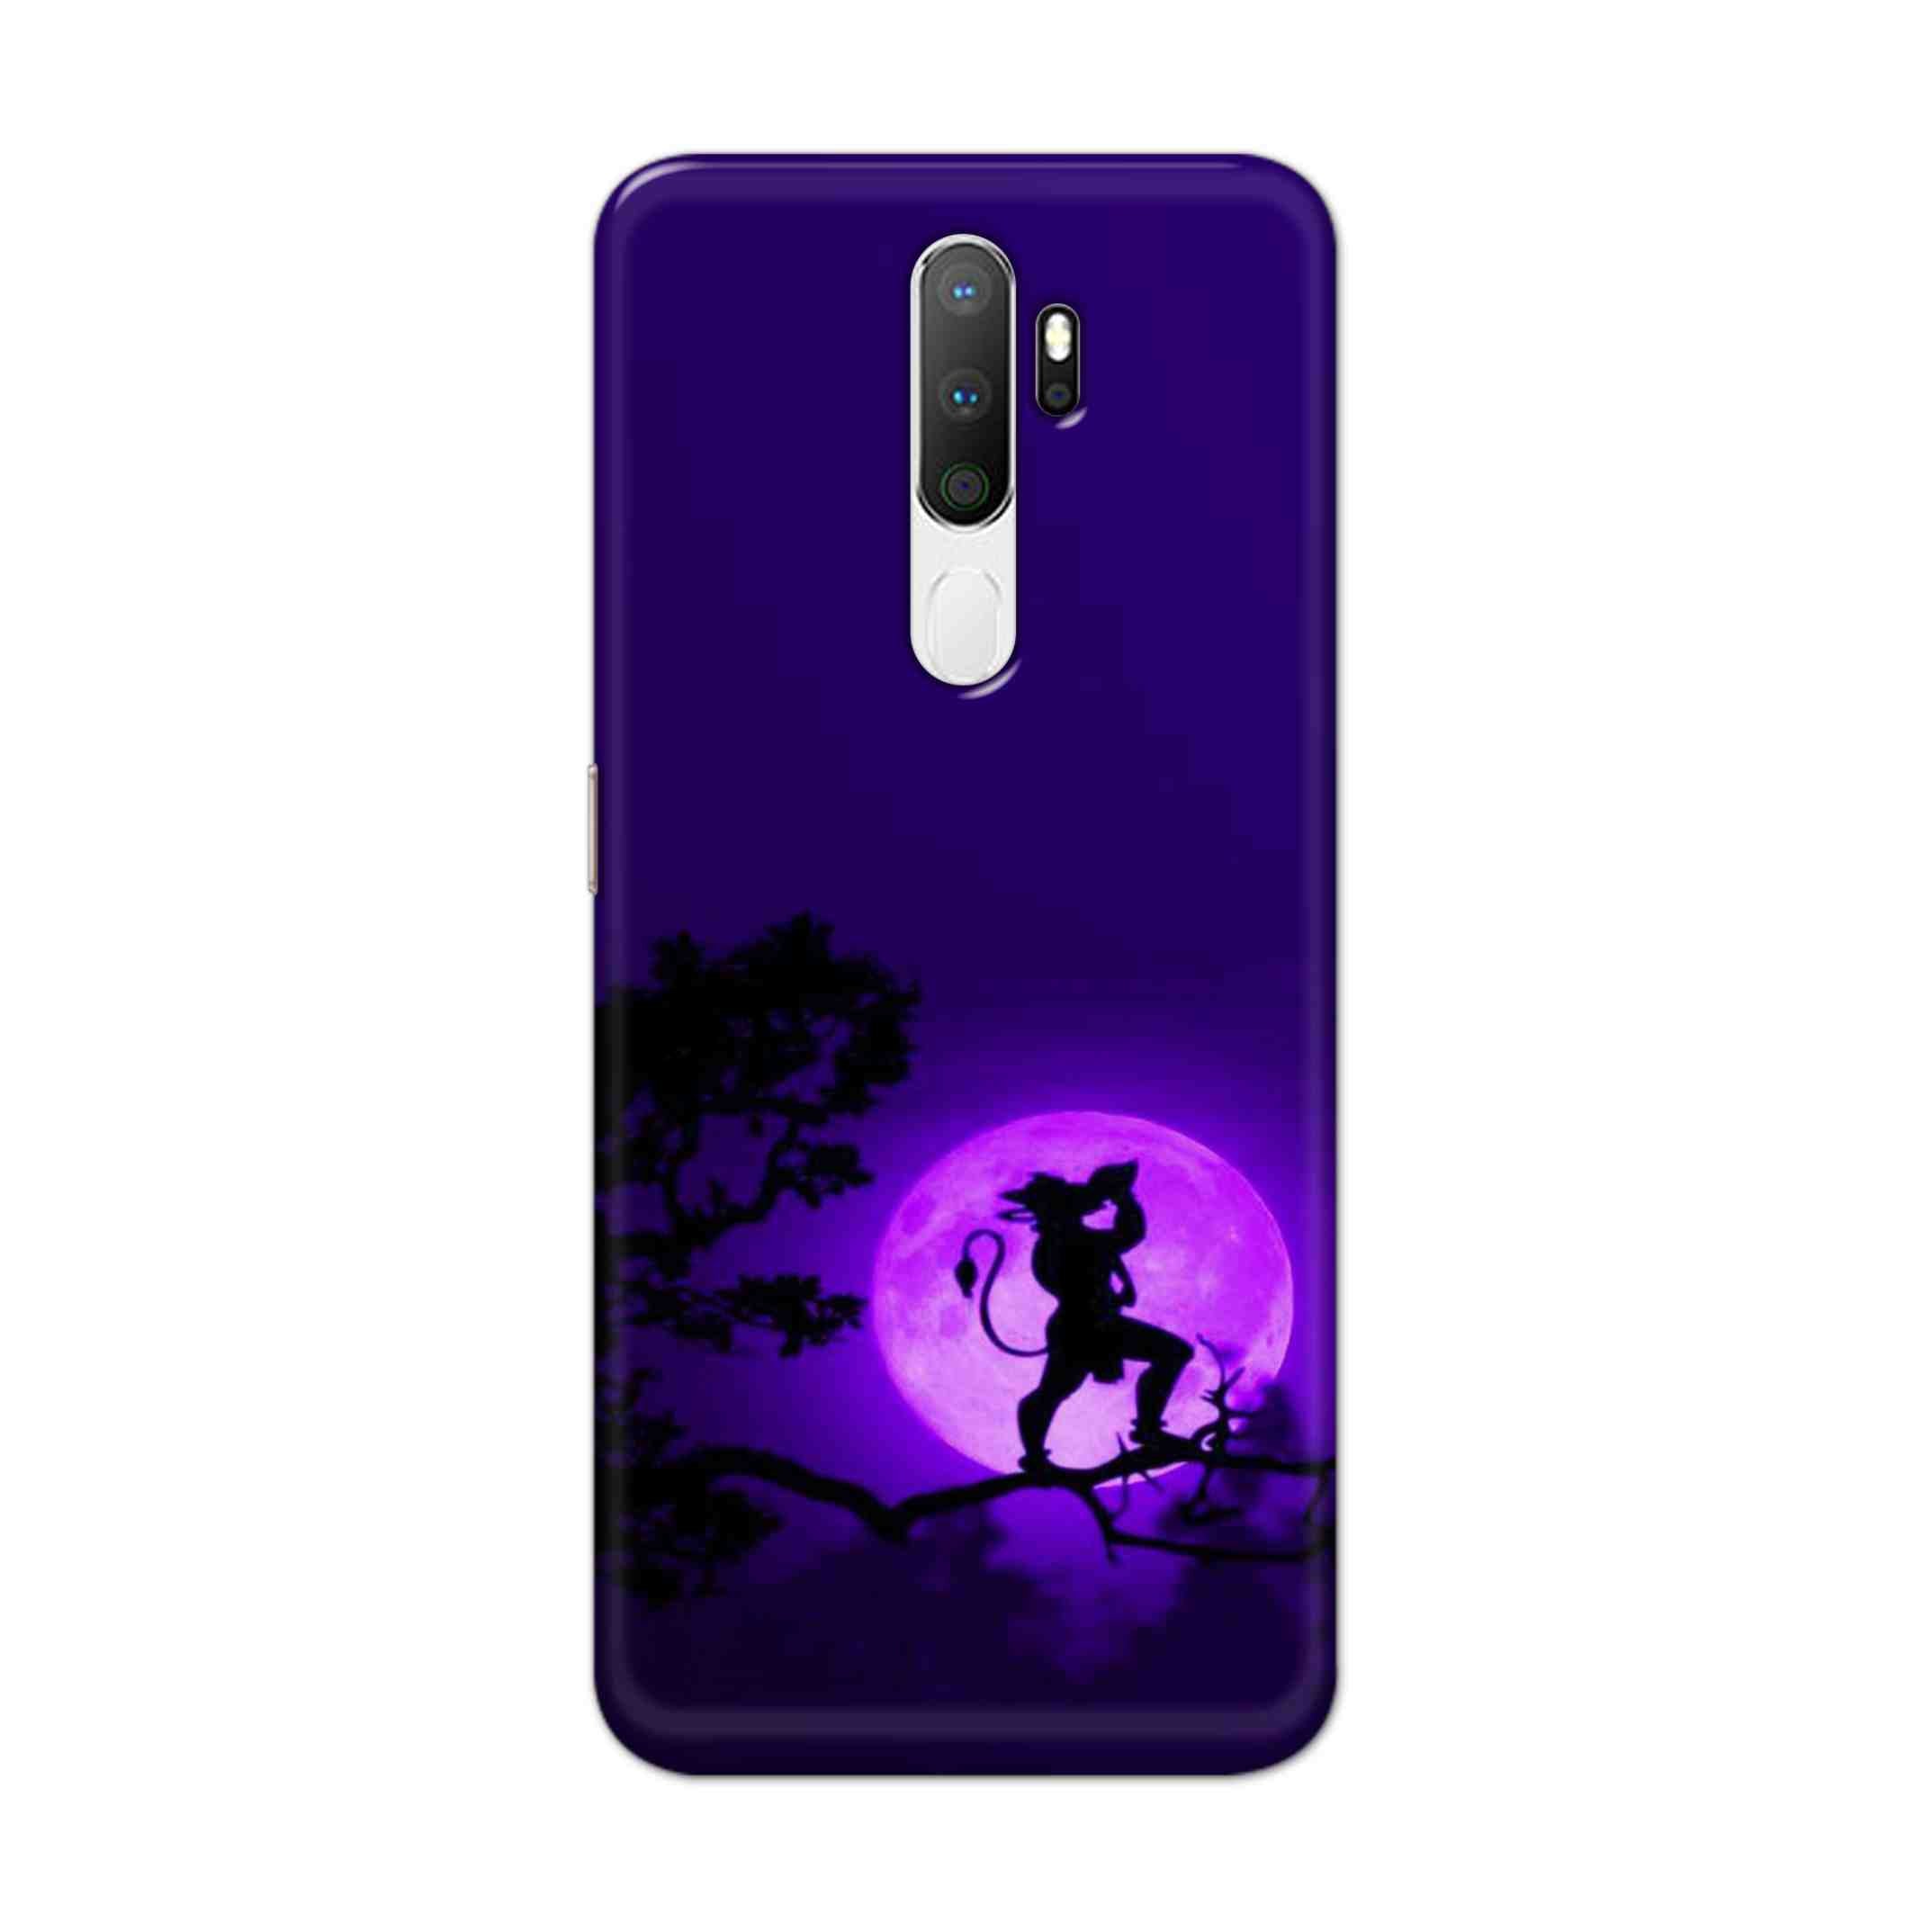 Buy Hanuman Hard Back Mobile Phone Case Cover For Oppo A5 (2020) Online